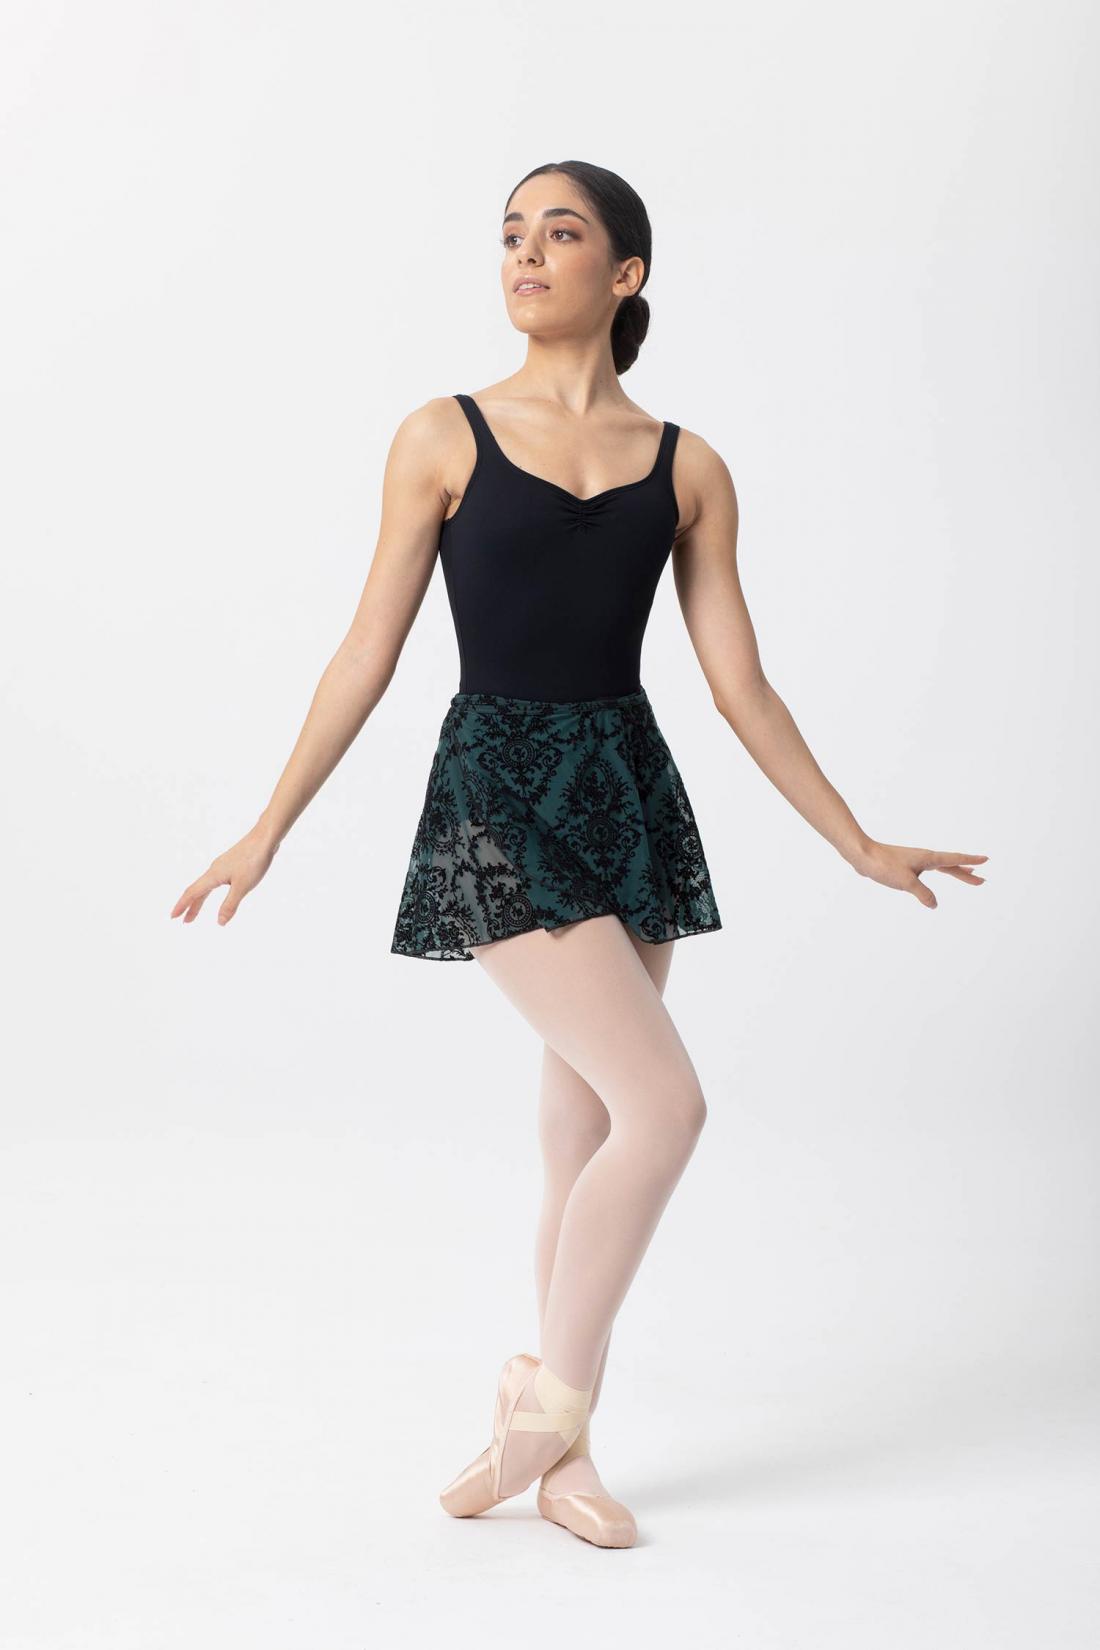 Intermezzo Manila Skirt Wrap Floc Mesh with Elastic Ties Ballet Dance